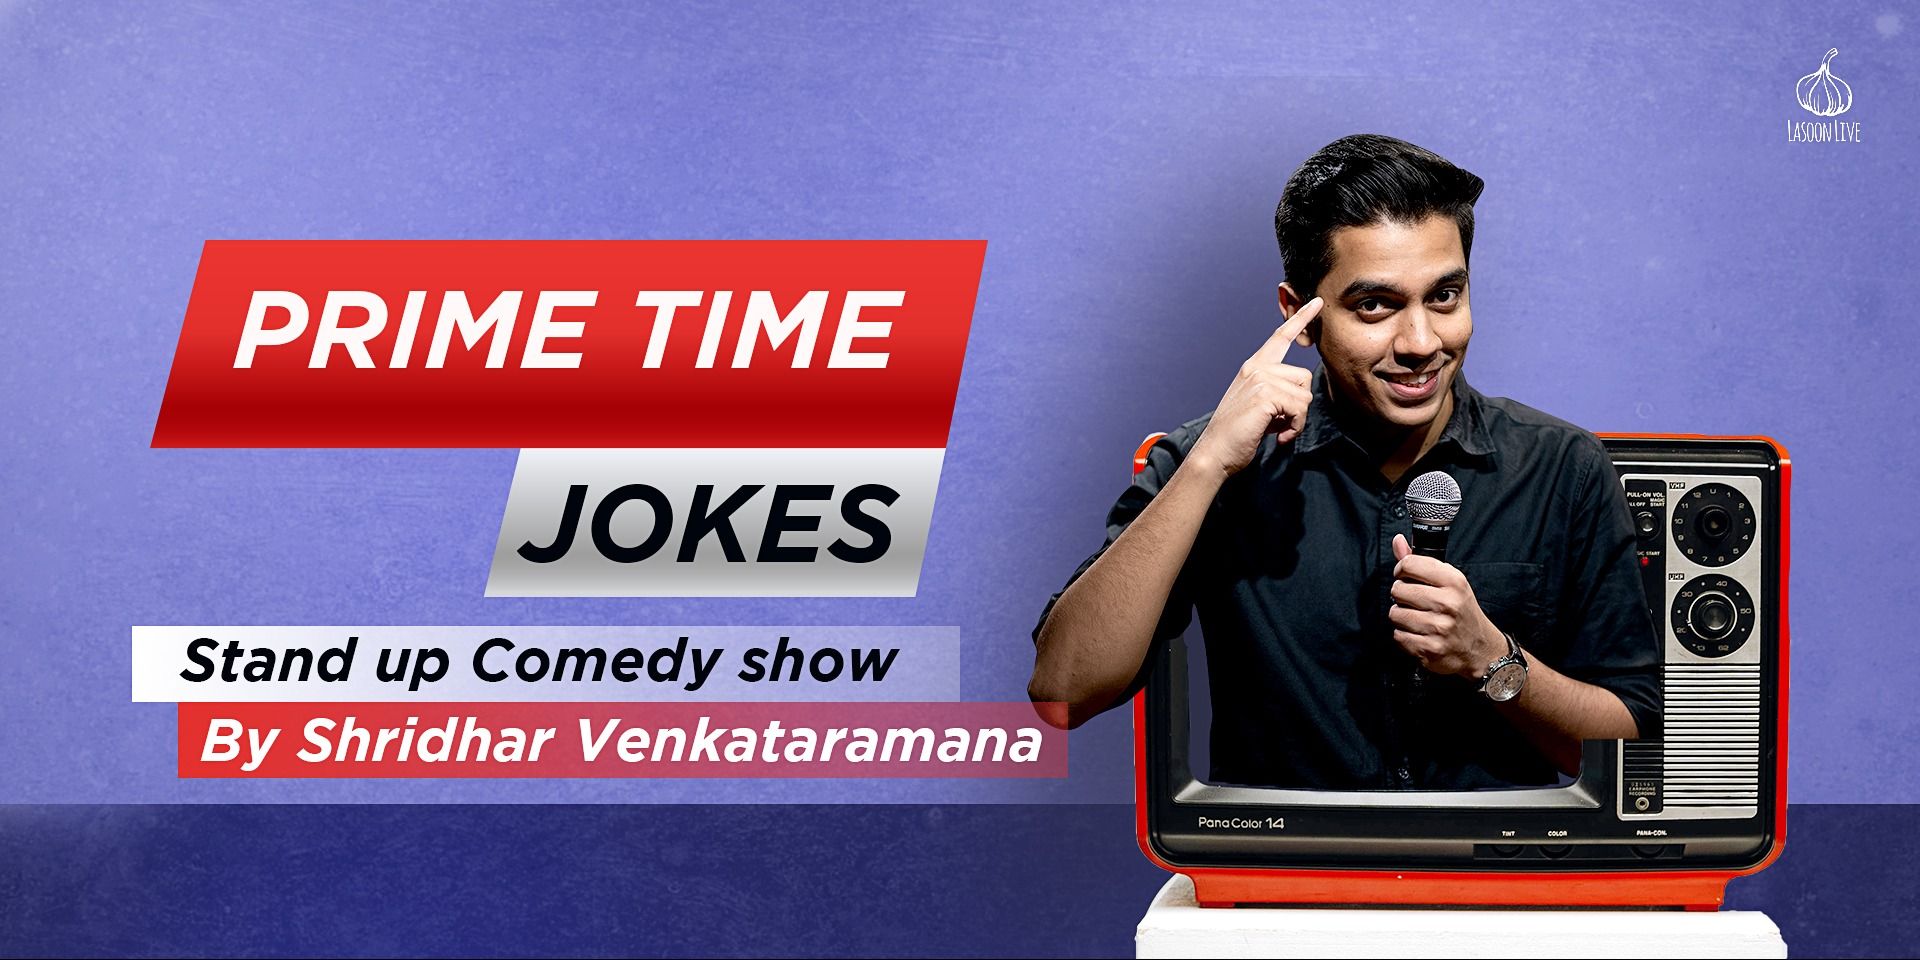 Prime Time Jokes – Shridhar Venkataramana (Comedy) in Bengaluru